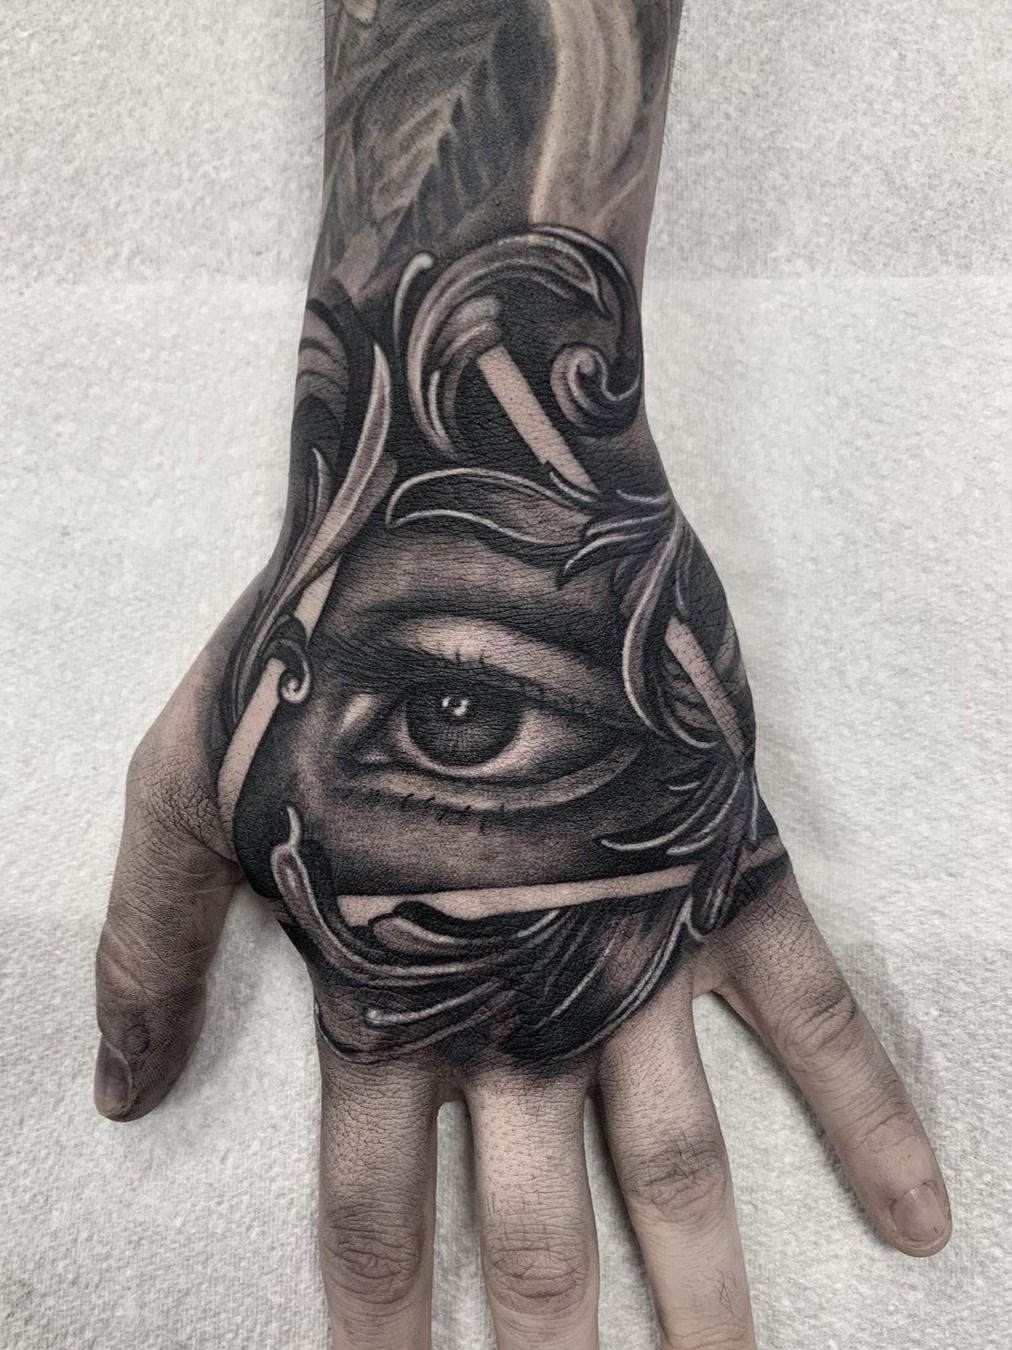 Hand Eye Piece done by Sunny at Rockstar Ink in Hamilton Ontario Canada  r tattoos